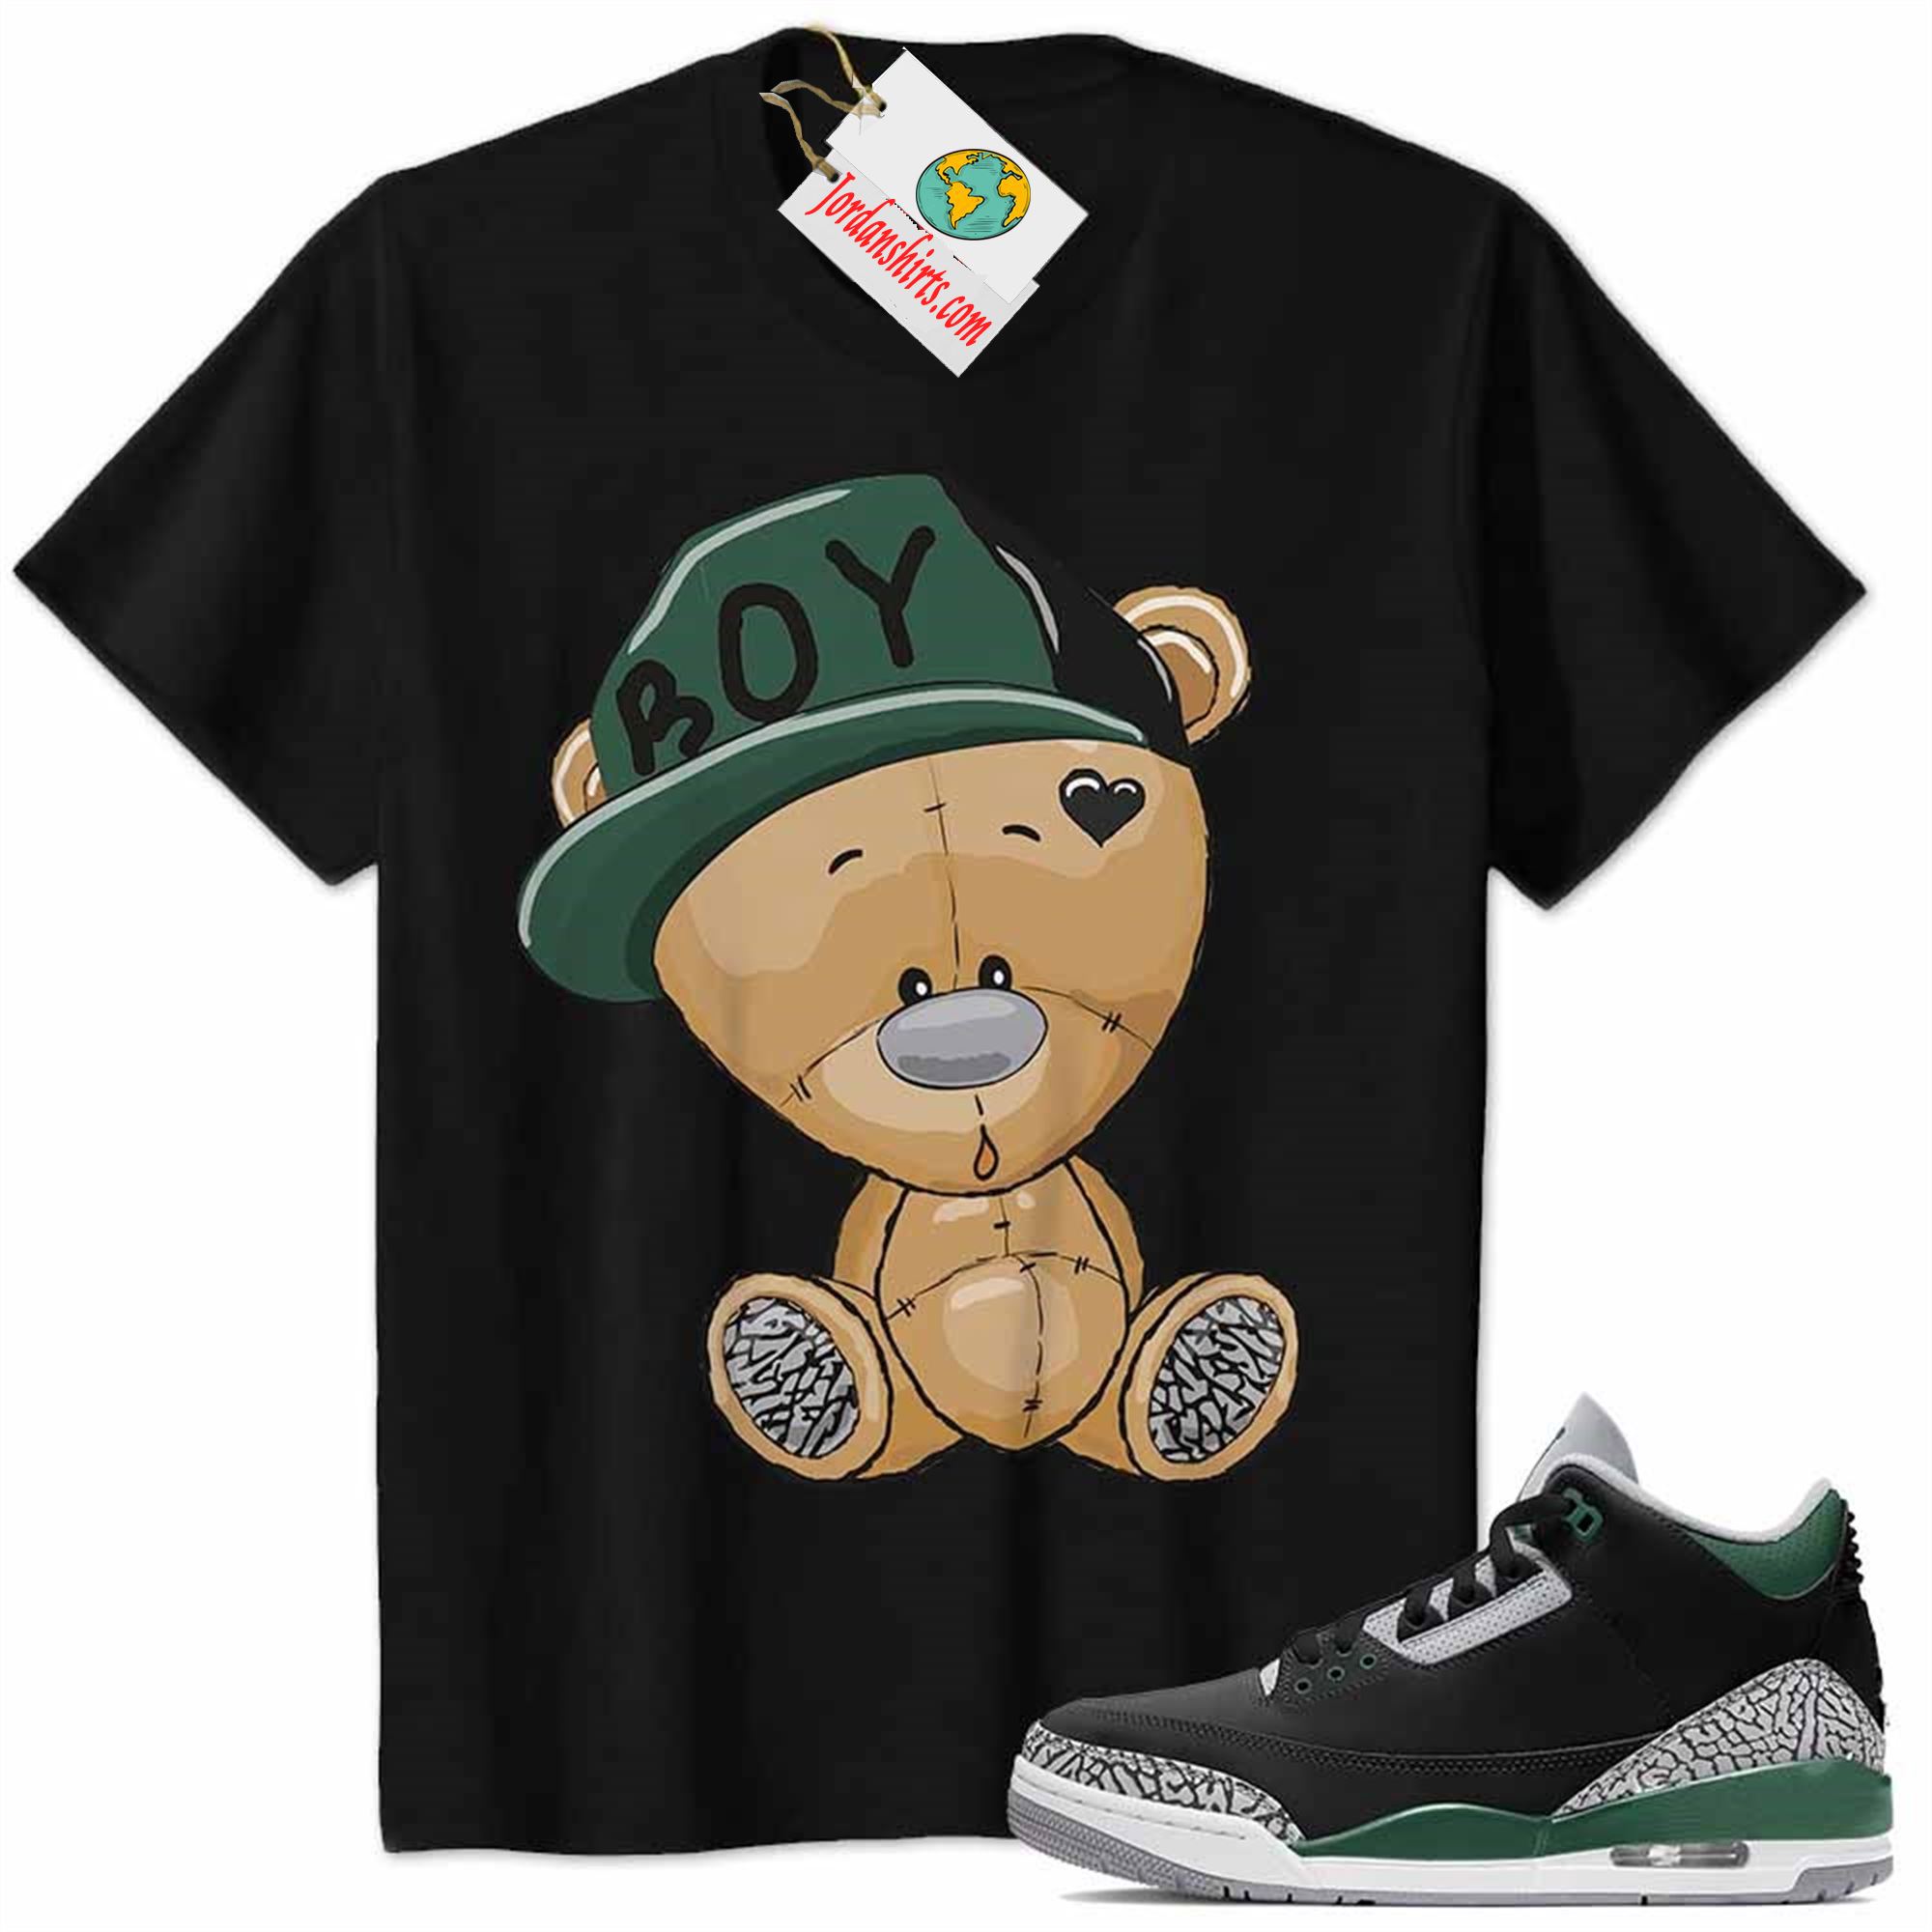 Jordan 3 Shirt, Jordan 3 Pine Green Shirt Cute Baby Teddy Bear Black Full Size Up To 5xl